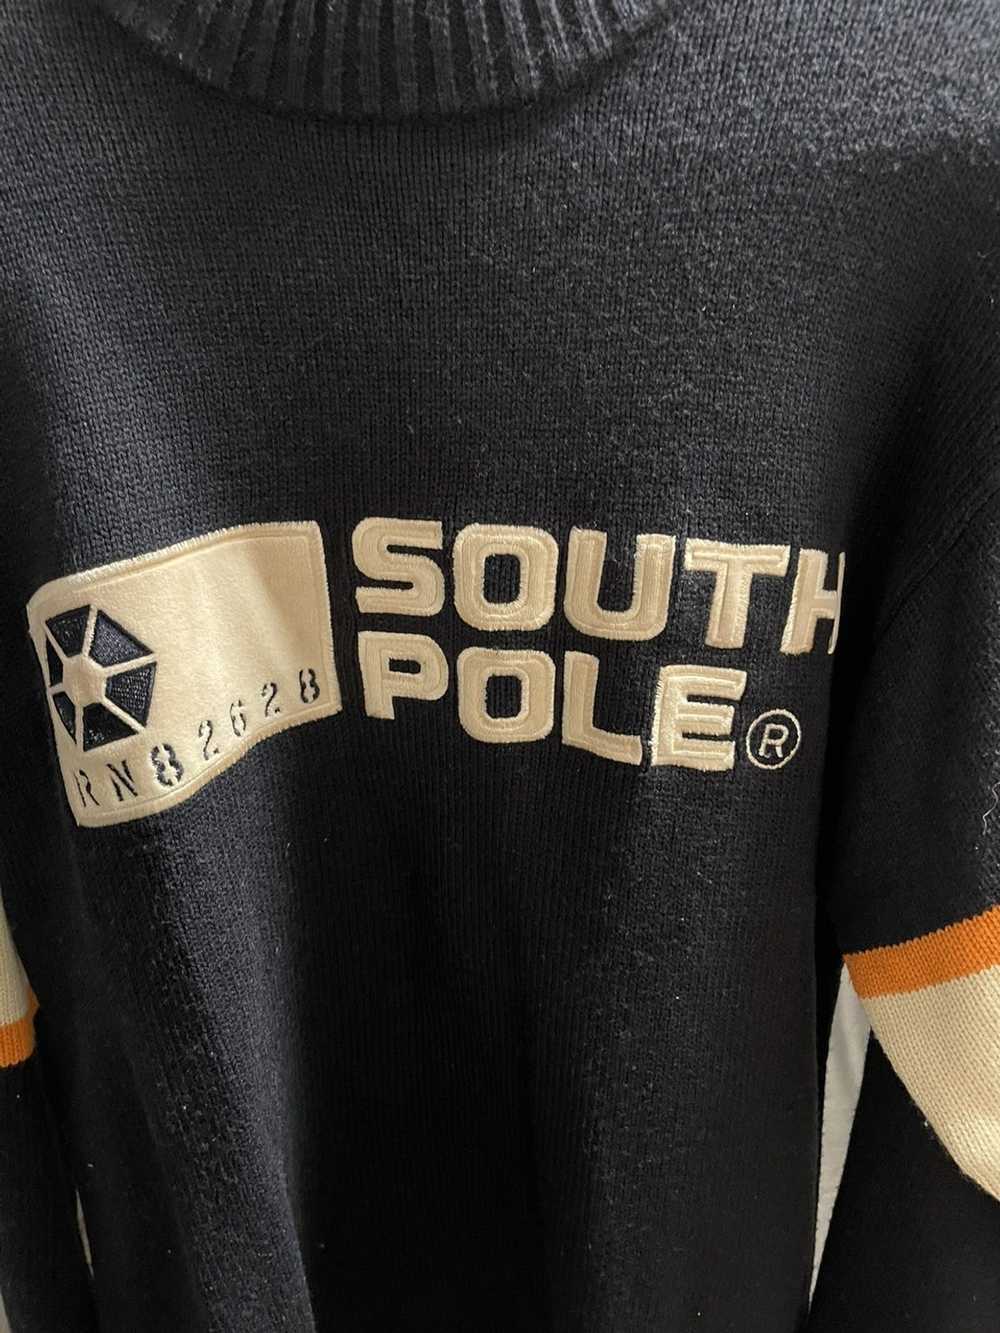 Southpole Vintage SouthPole sweater - image 3